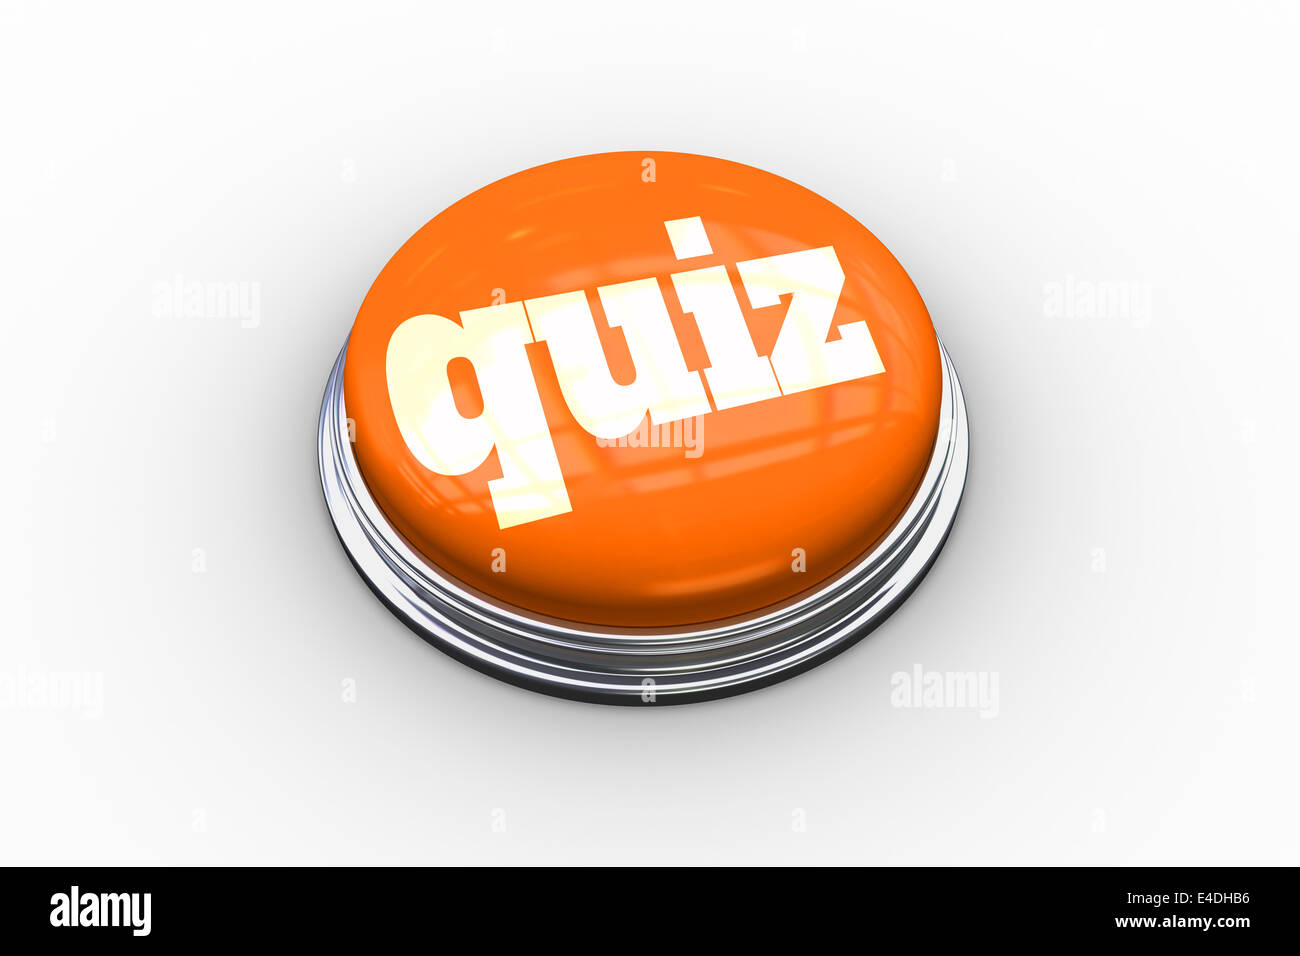 Quiz on shiny orange push button Stock Photo